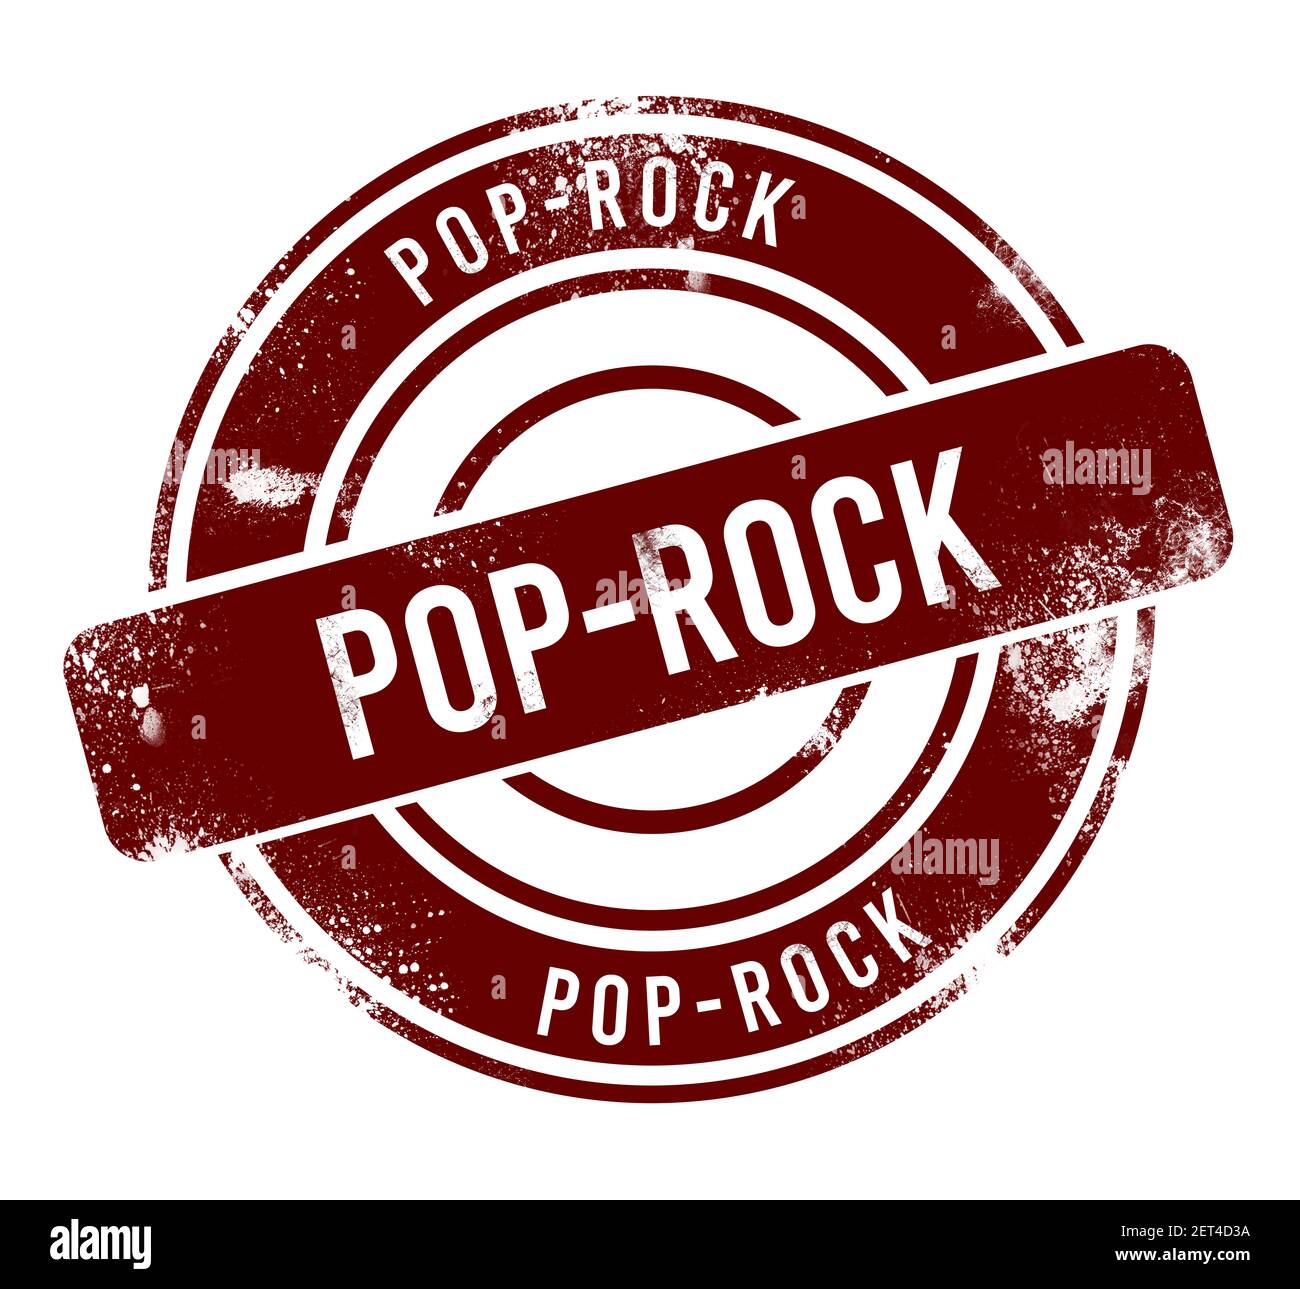 Pop-Rock - red grunge button, stamp Stock Photo - Alamy